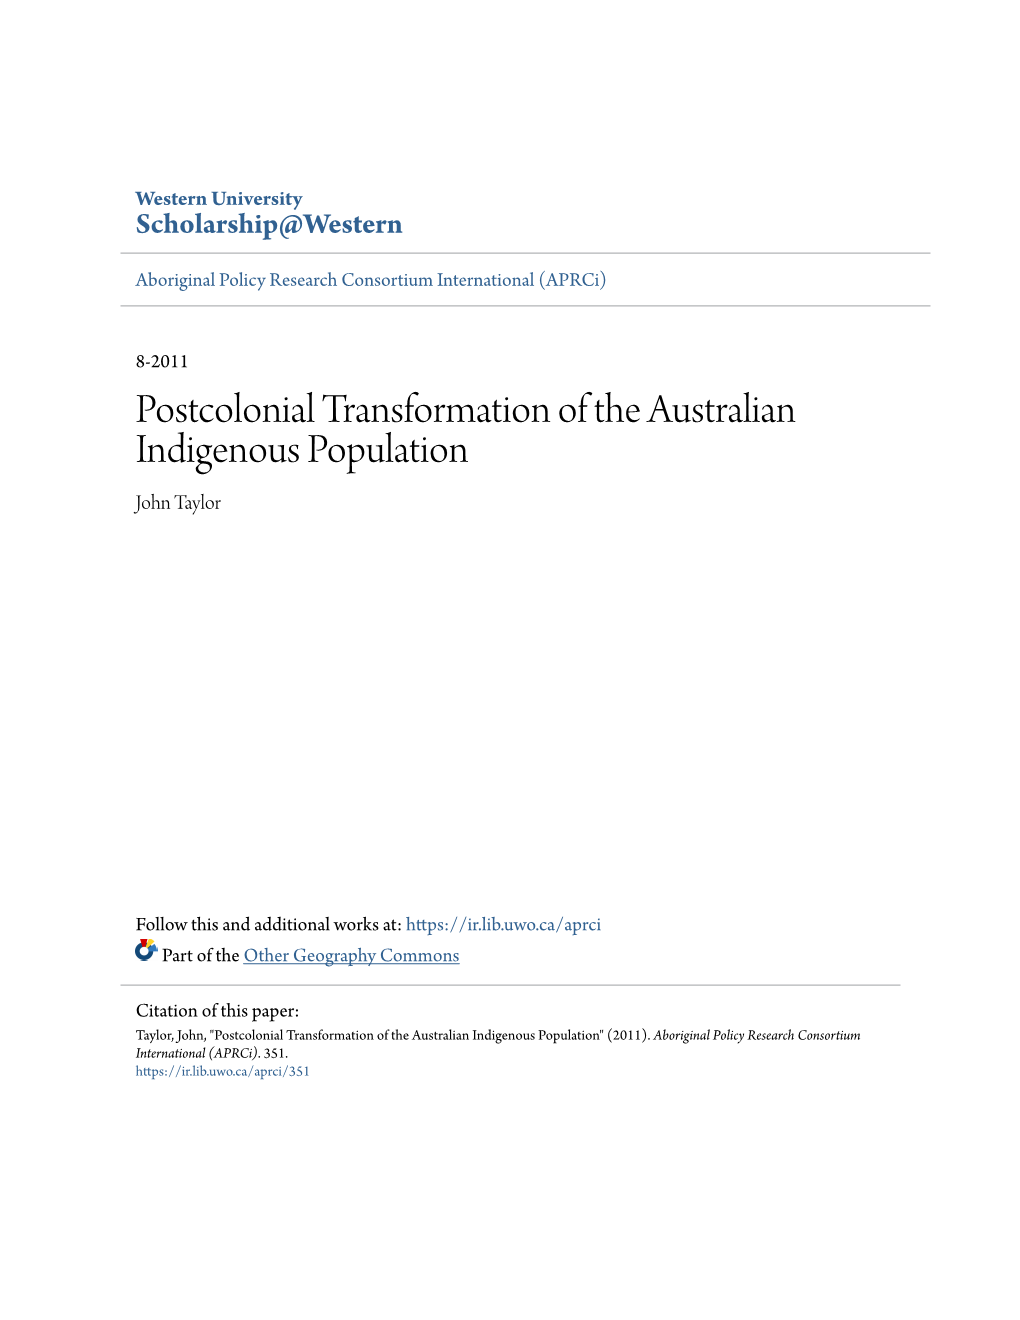 Postcolonial Transformation of the Australian Indigenous Population John Taylor